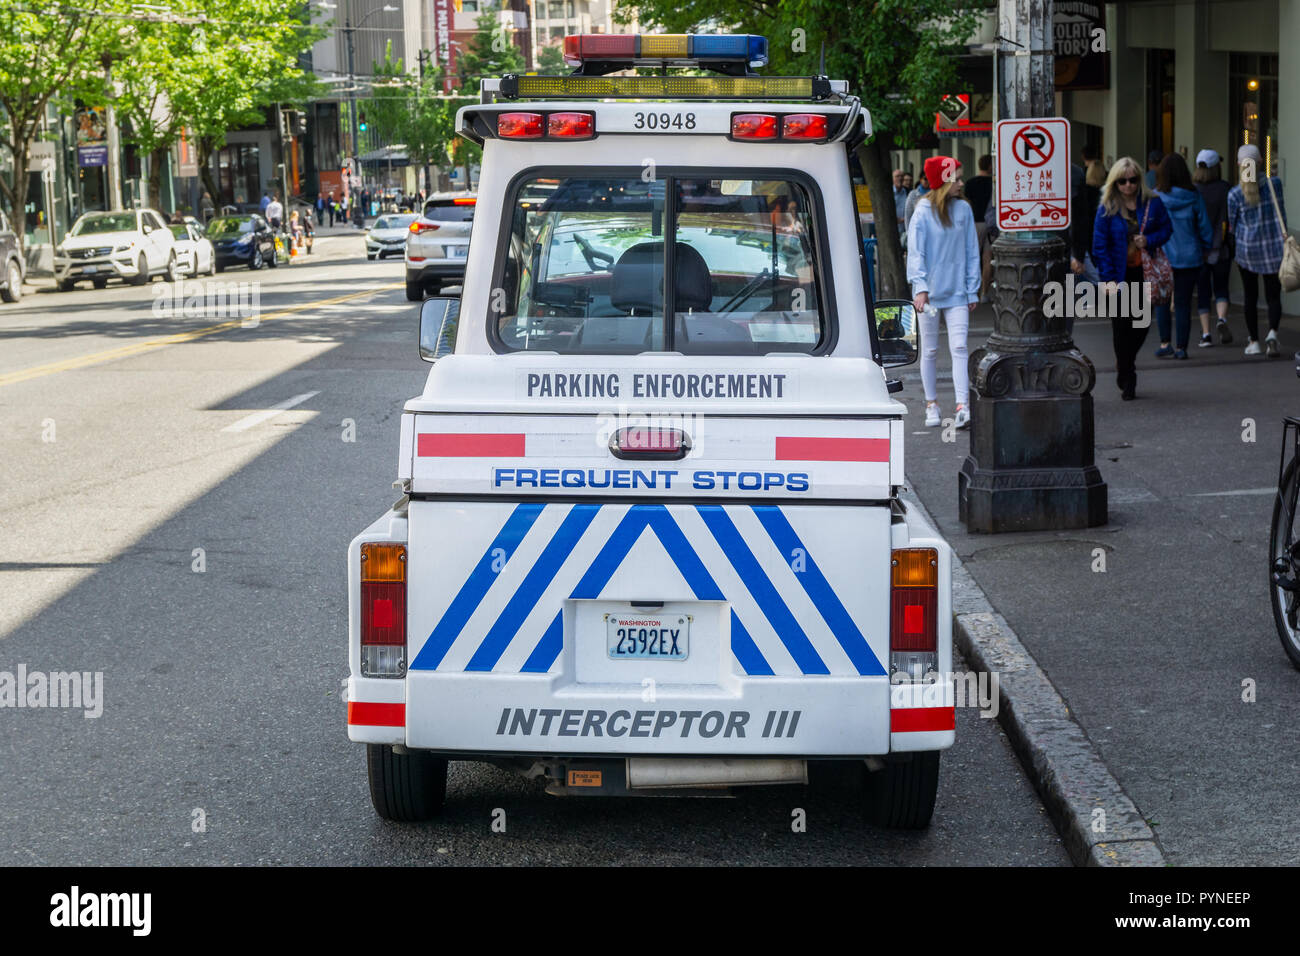 Parking enforcement vehicle or car; Interceptor 3, downtown Seattle, WA, USA. Stock Photo